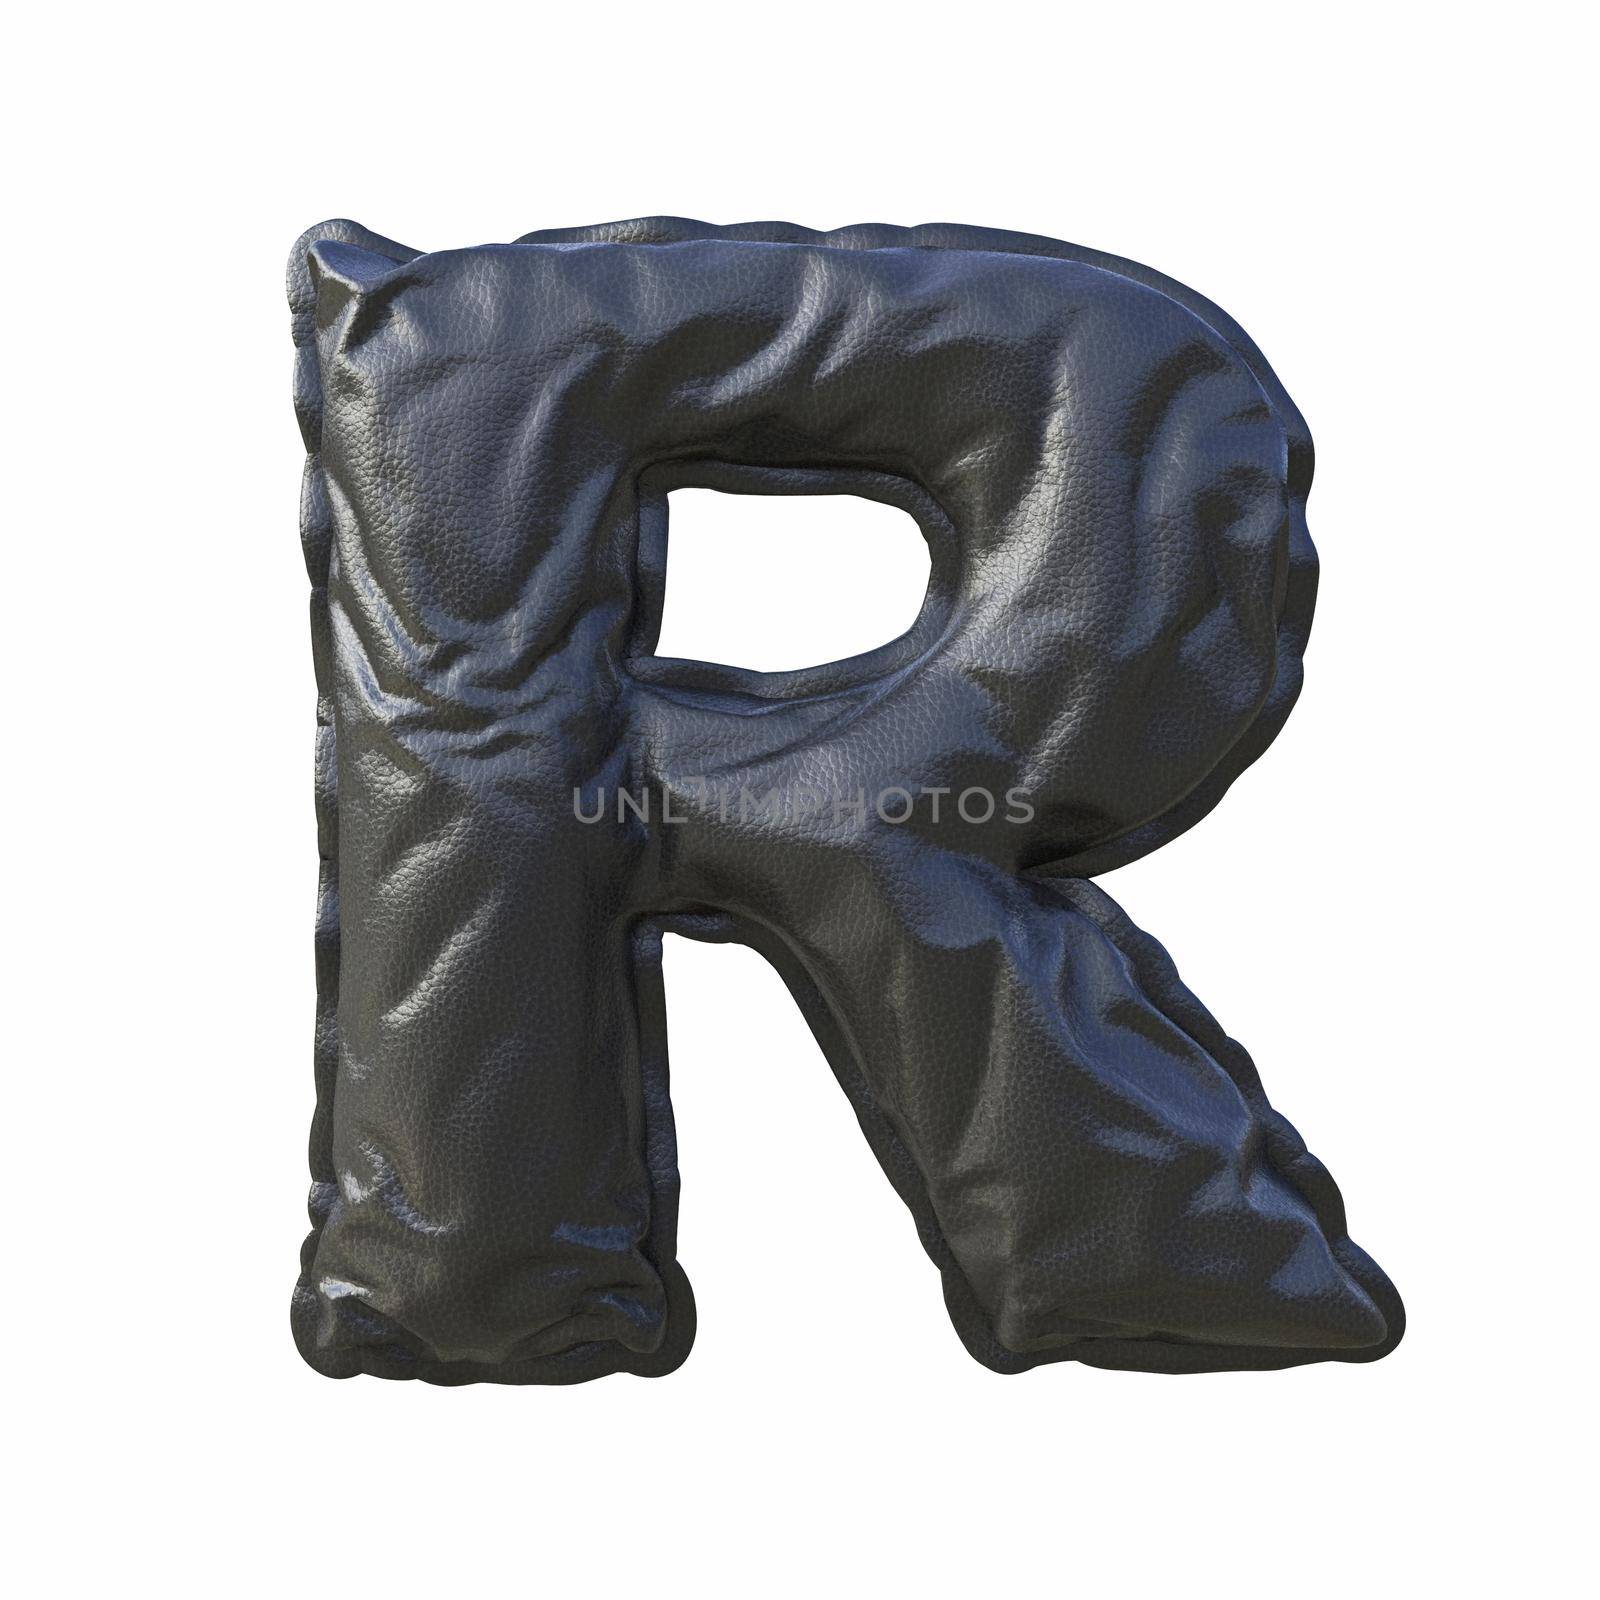 Black leather font Letter R 3D render illustration isolated on white background